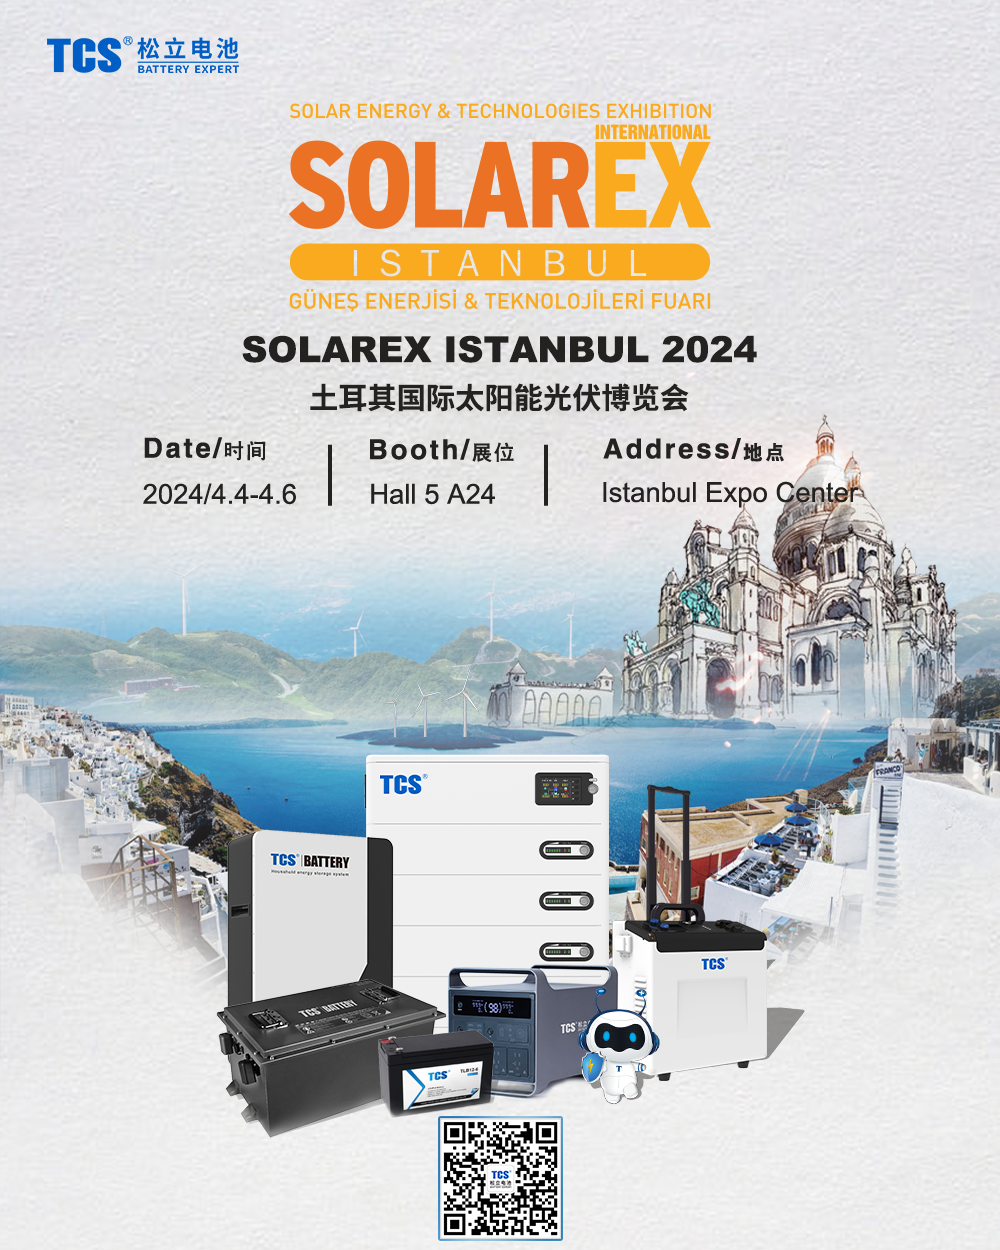 Solarex Istanbul 2024 Aula 5 A24